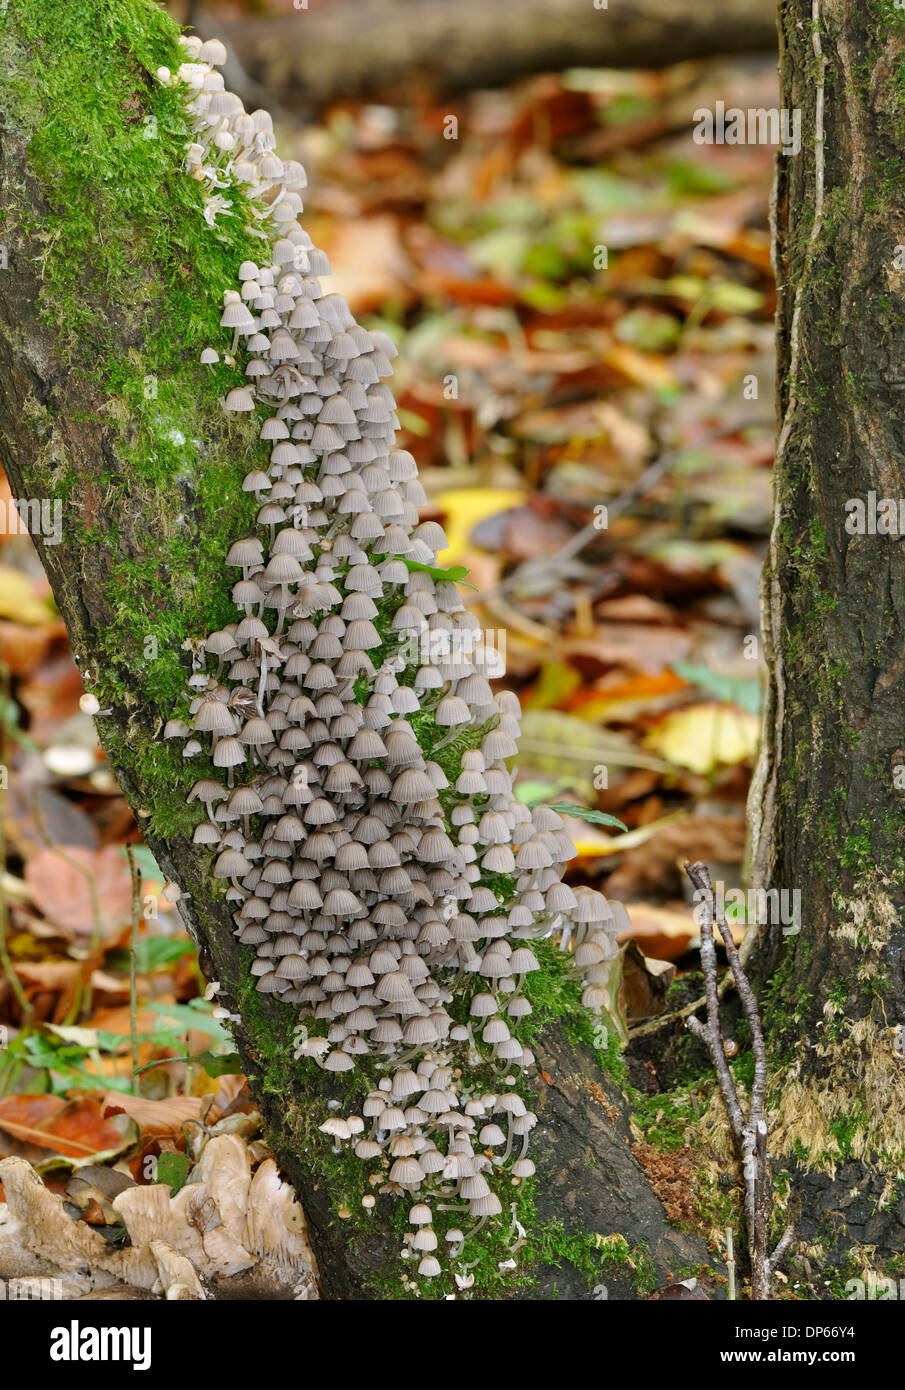 Faries Bonnets - Coprinus disseminatus Fungi on tree trunk Stock Photo